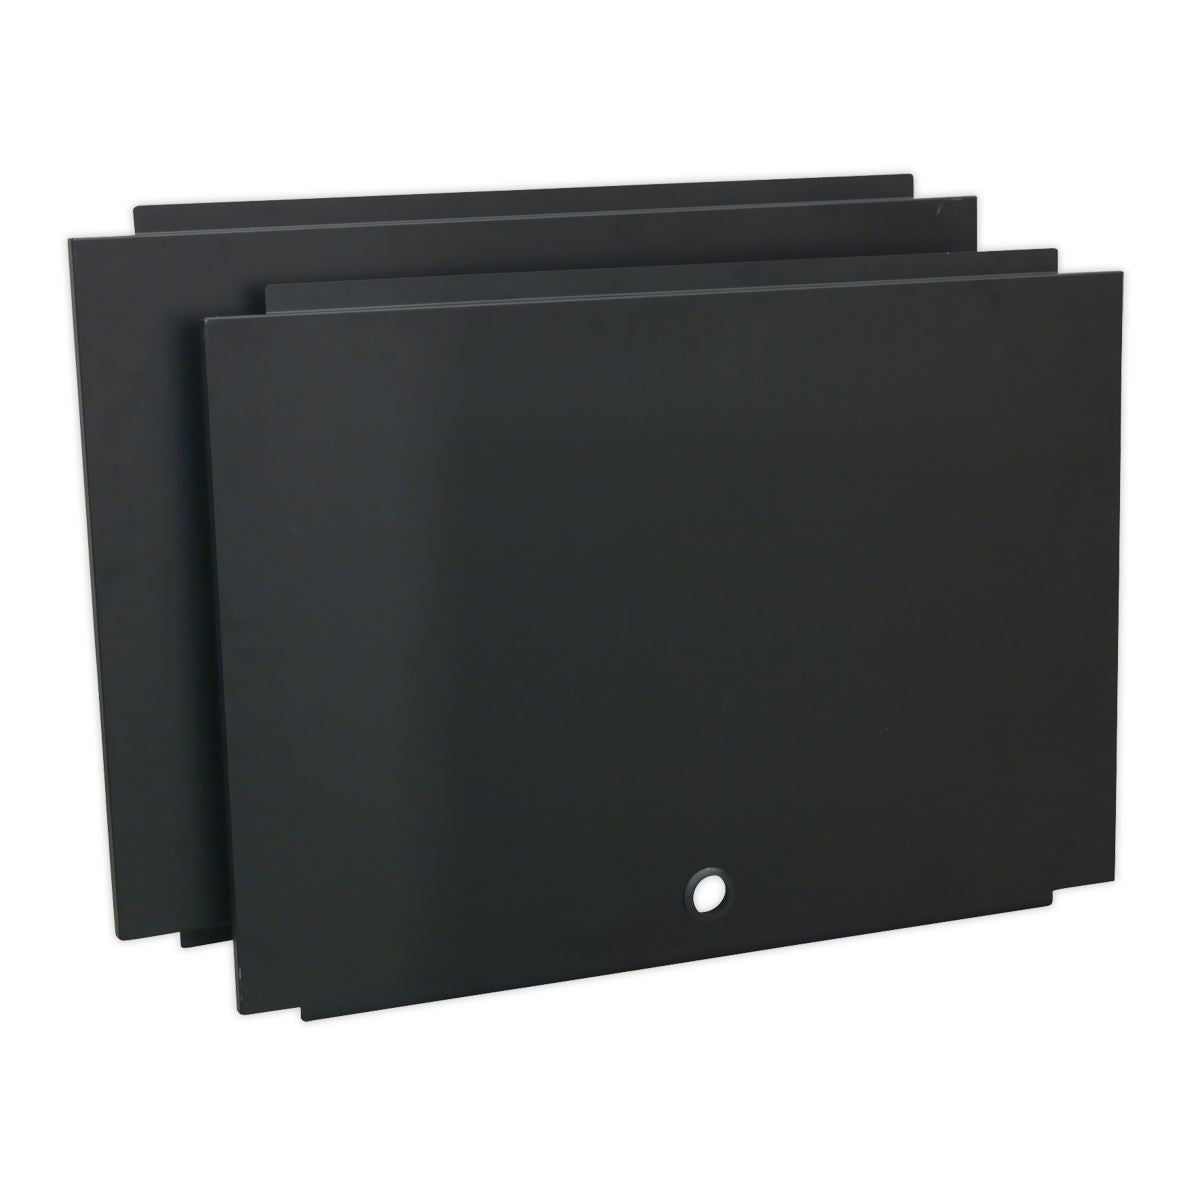 Sealey Premier Back Panel Assembly for Modular Corner Wall Cabinet 930mm